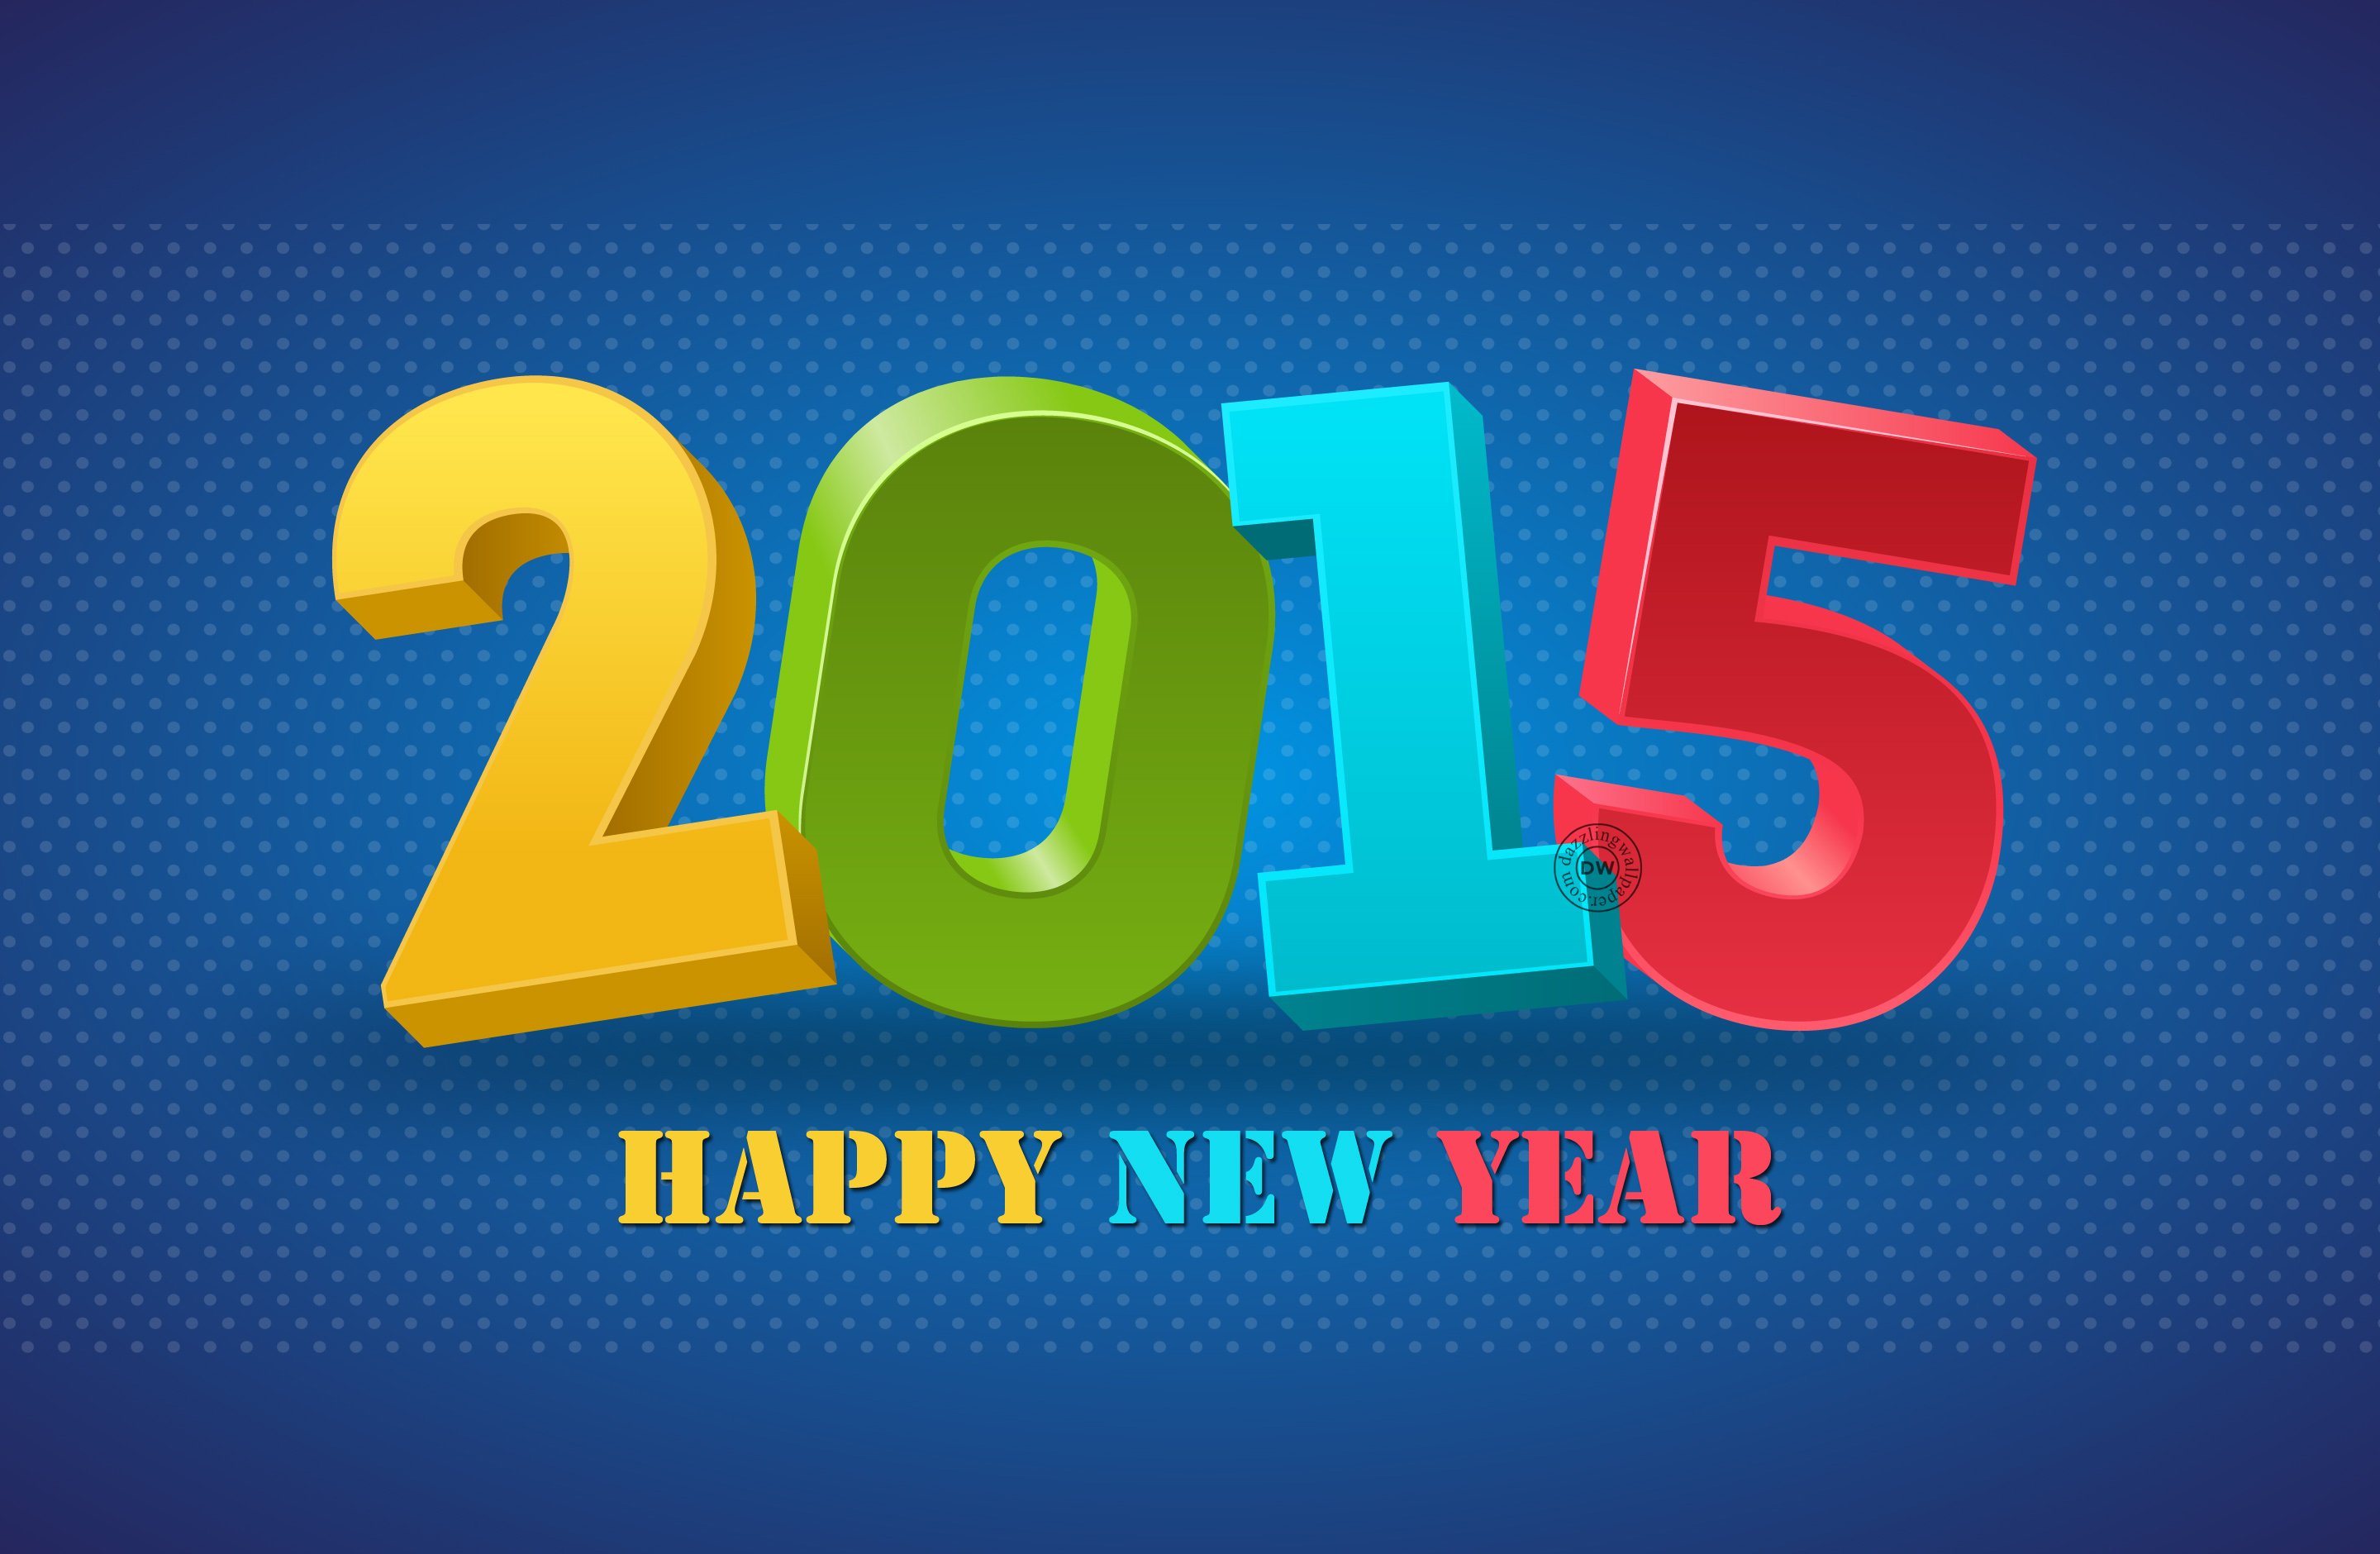 Very happy new year 2015 wallpaper 2880x1880